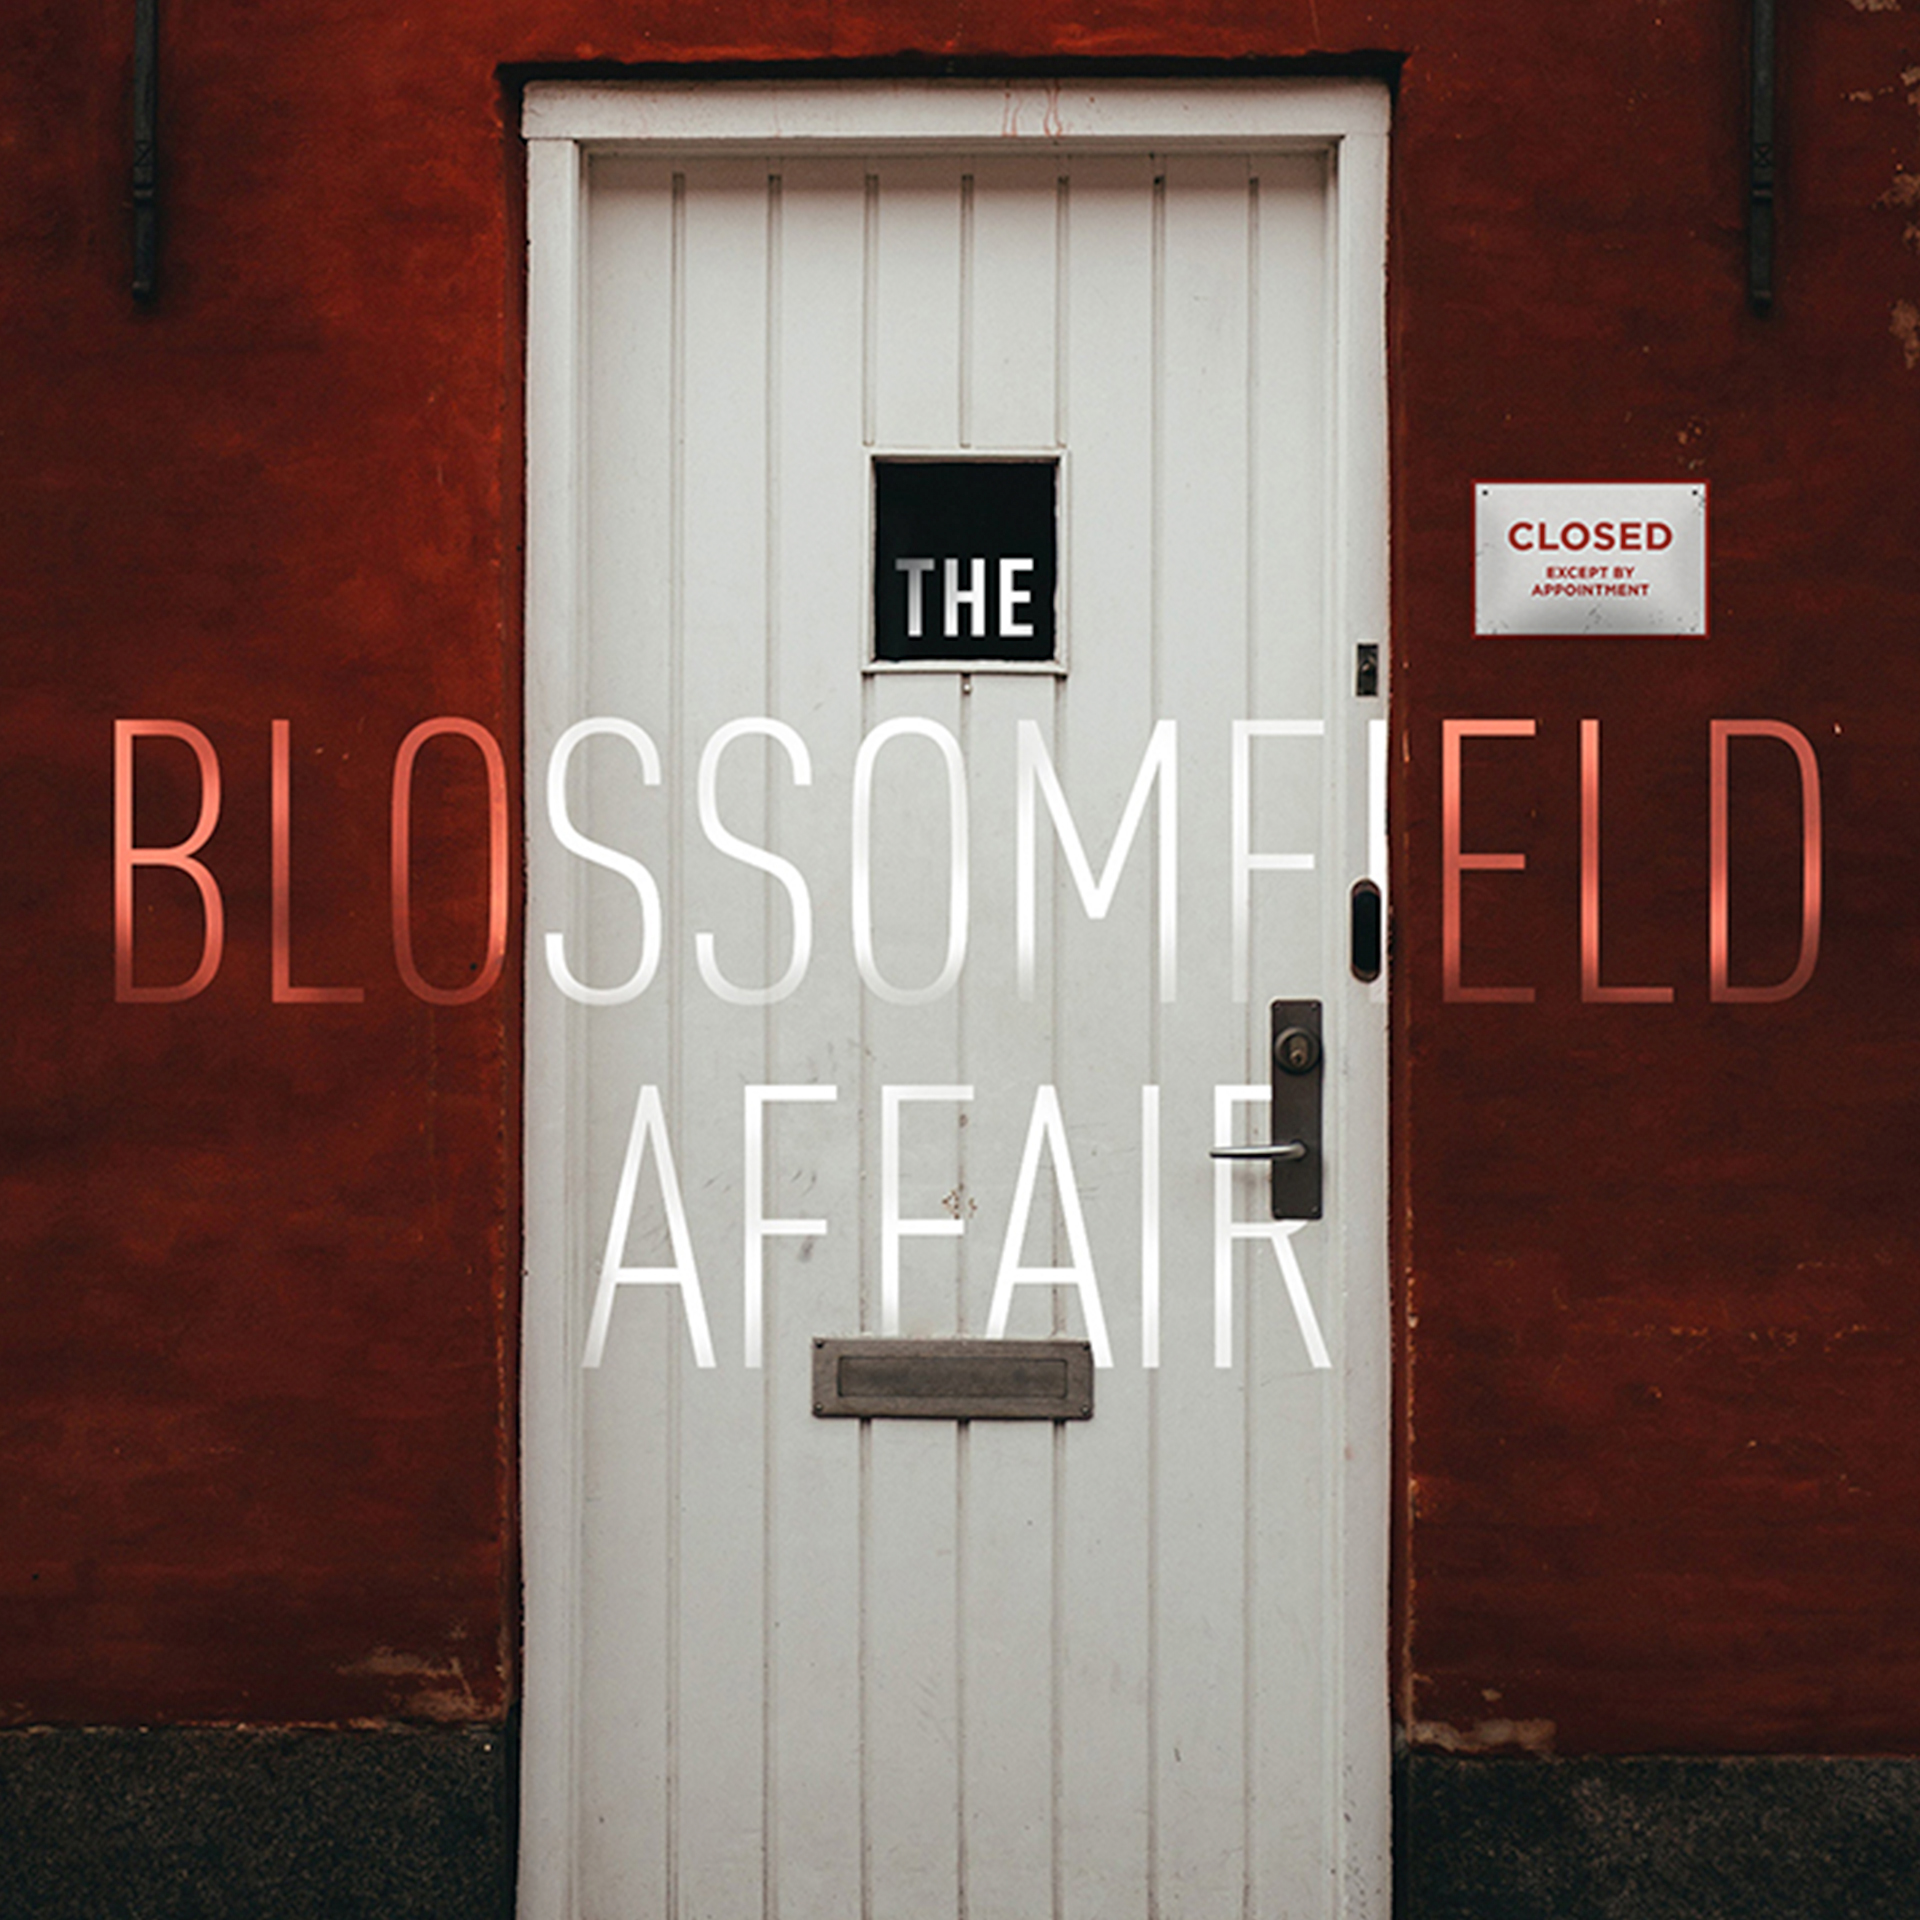 The Blossomfield Affair